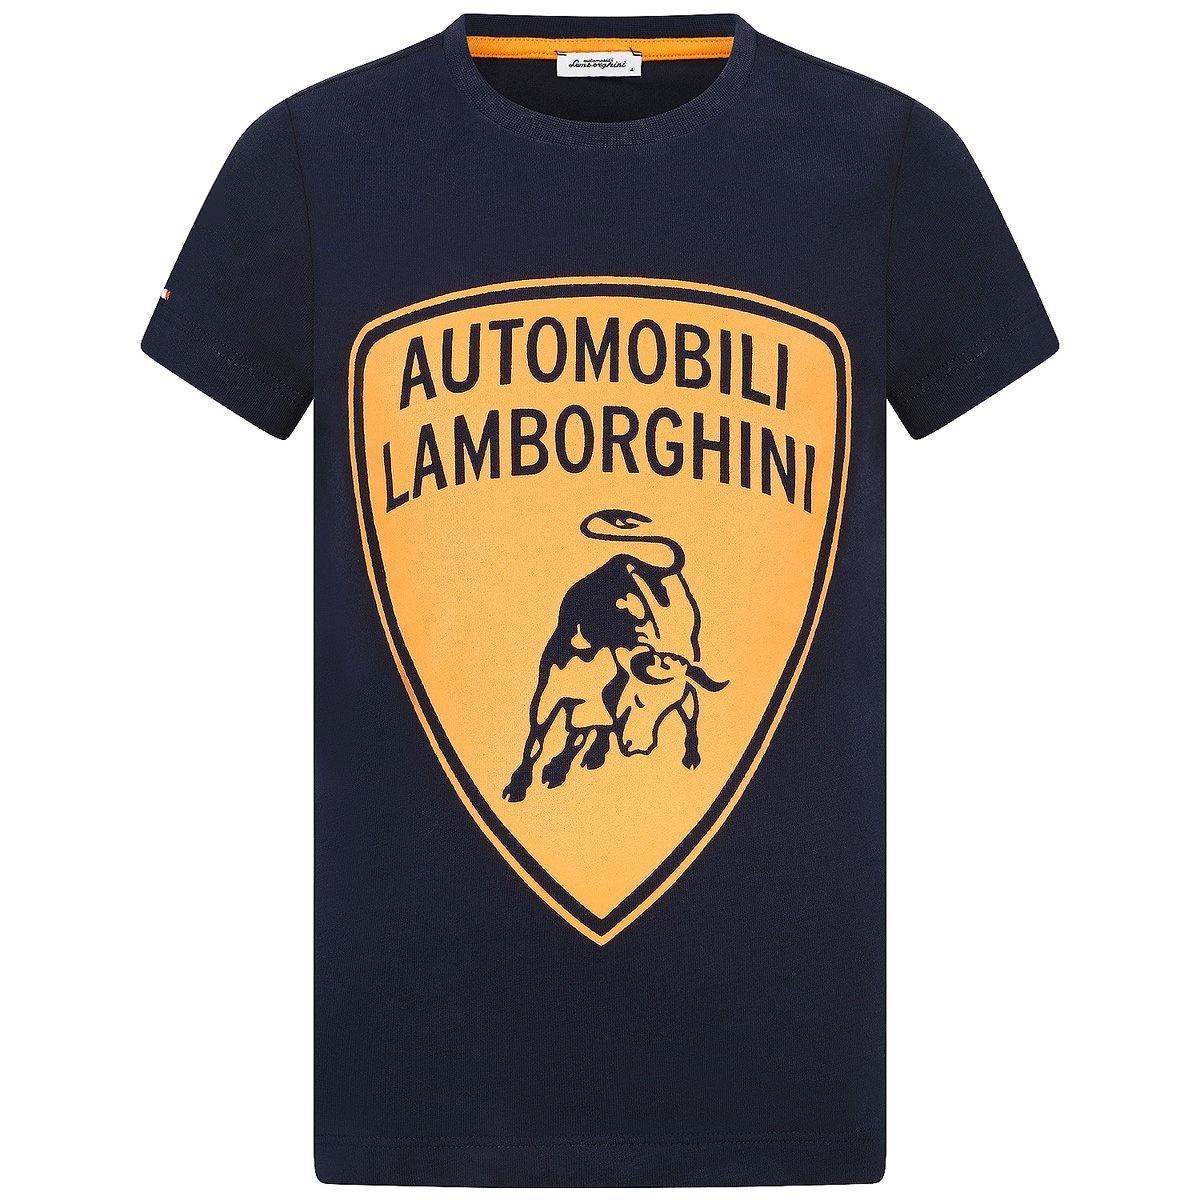 Orange and Navy Logo - Automobili Lamborghini Navy & Orange Bull Logo Top